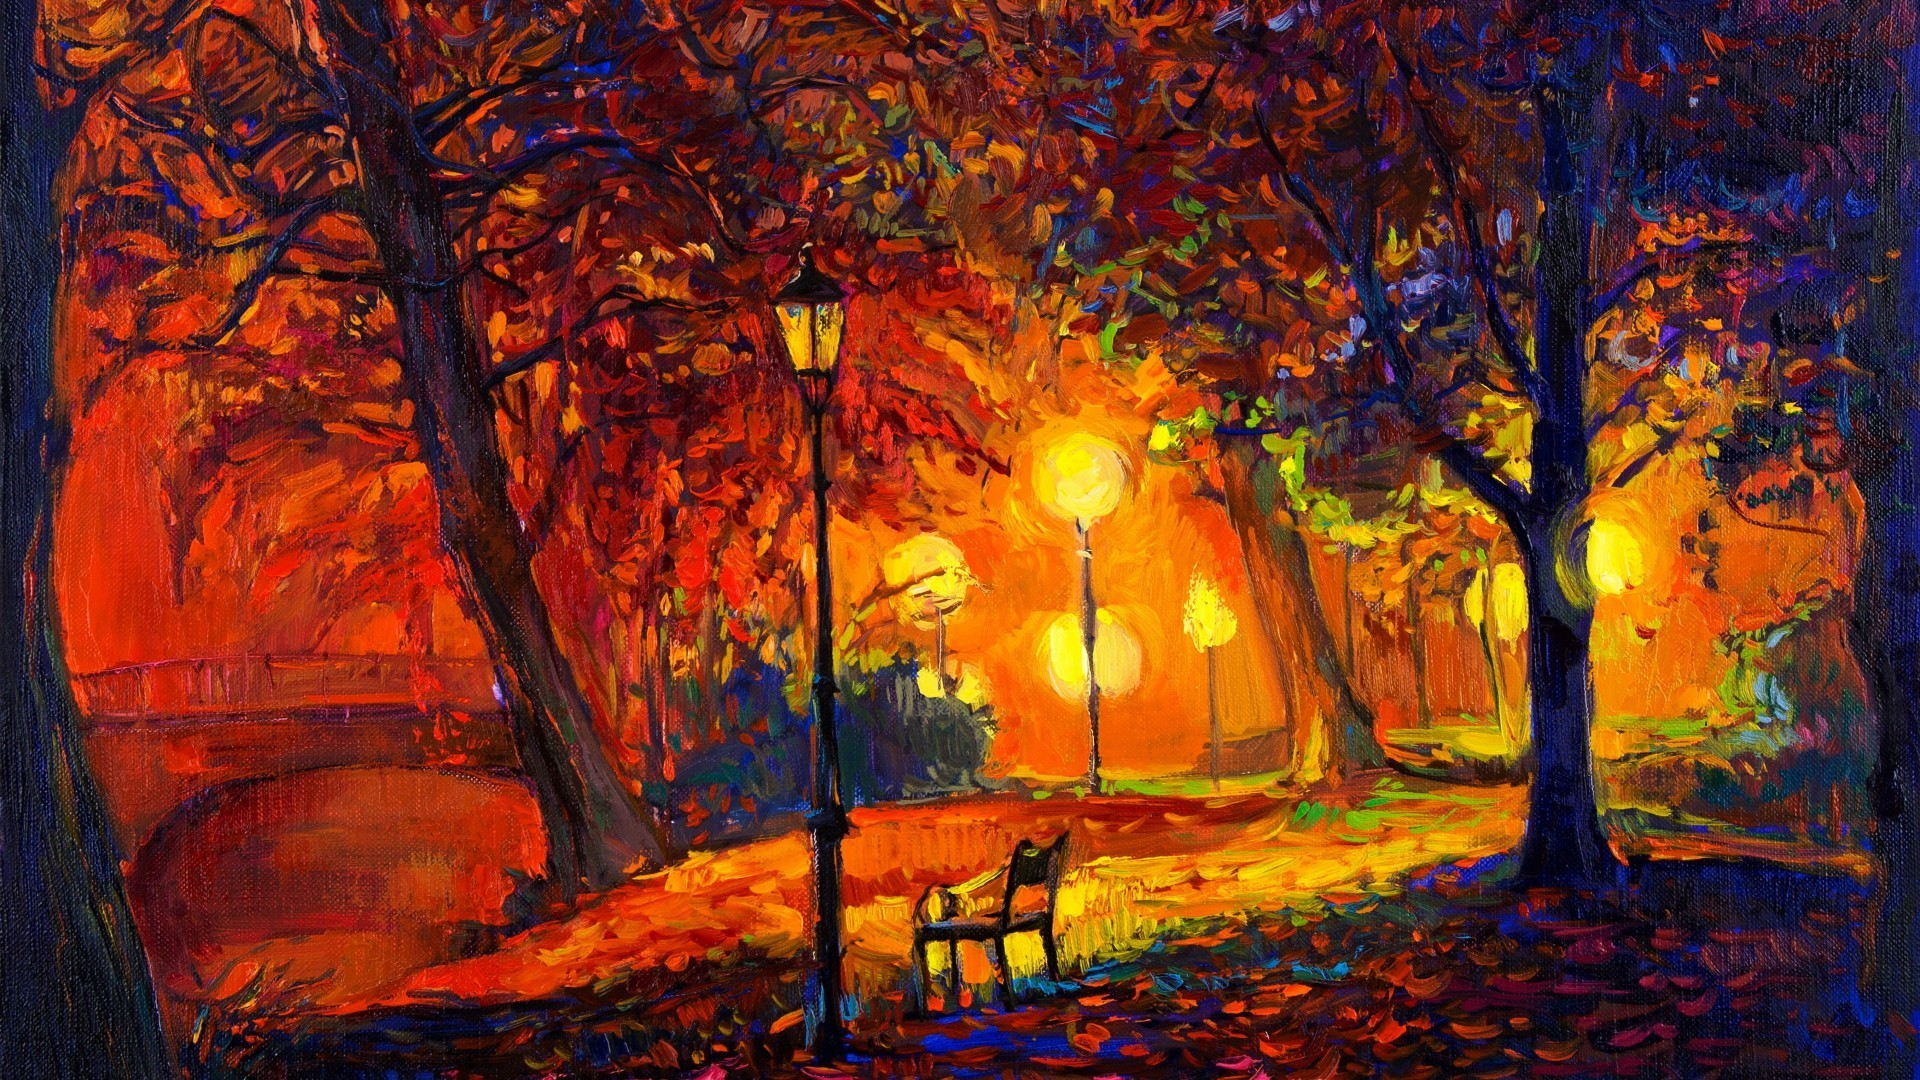 1920x1080 General  digital art nature trees painting park bench lamp fall  leaves modern impressionism artwork